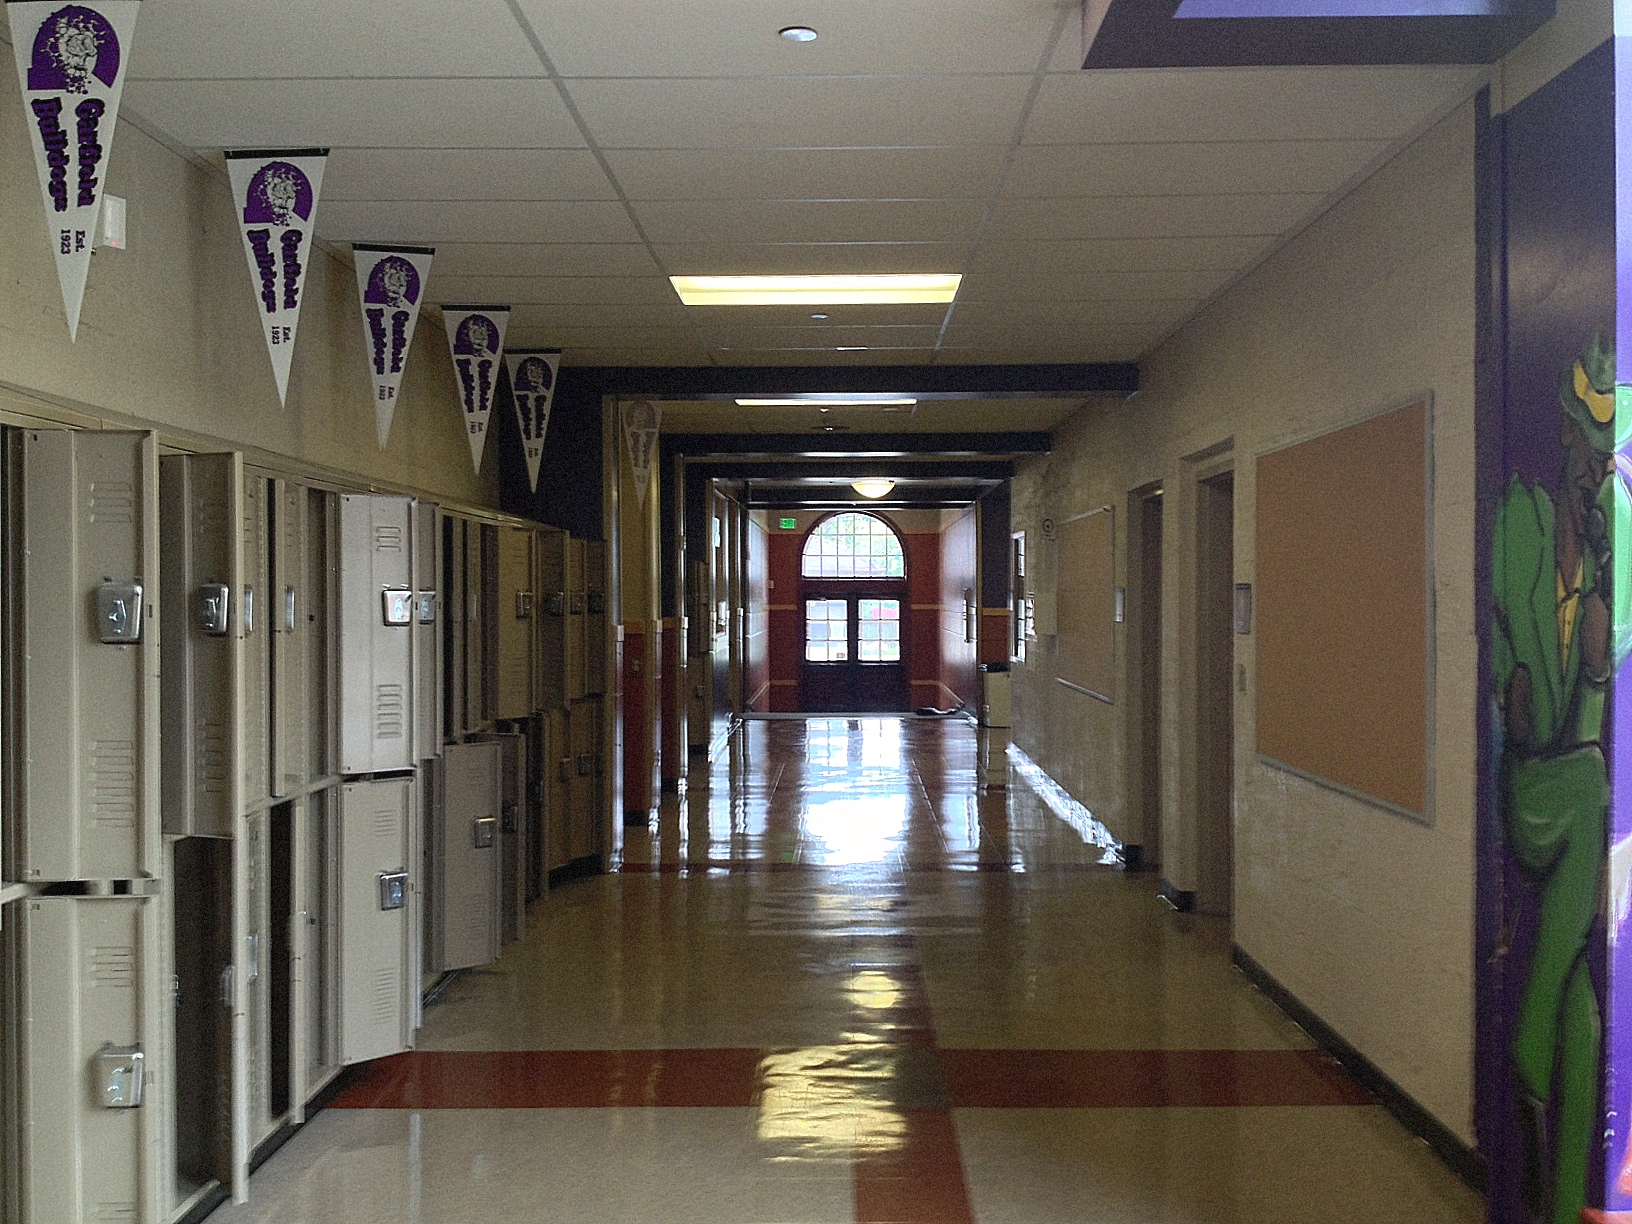 Hallway at Garfield High School